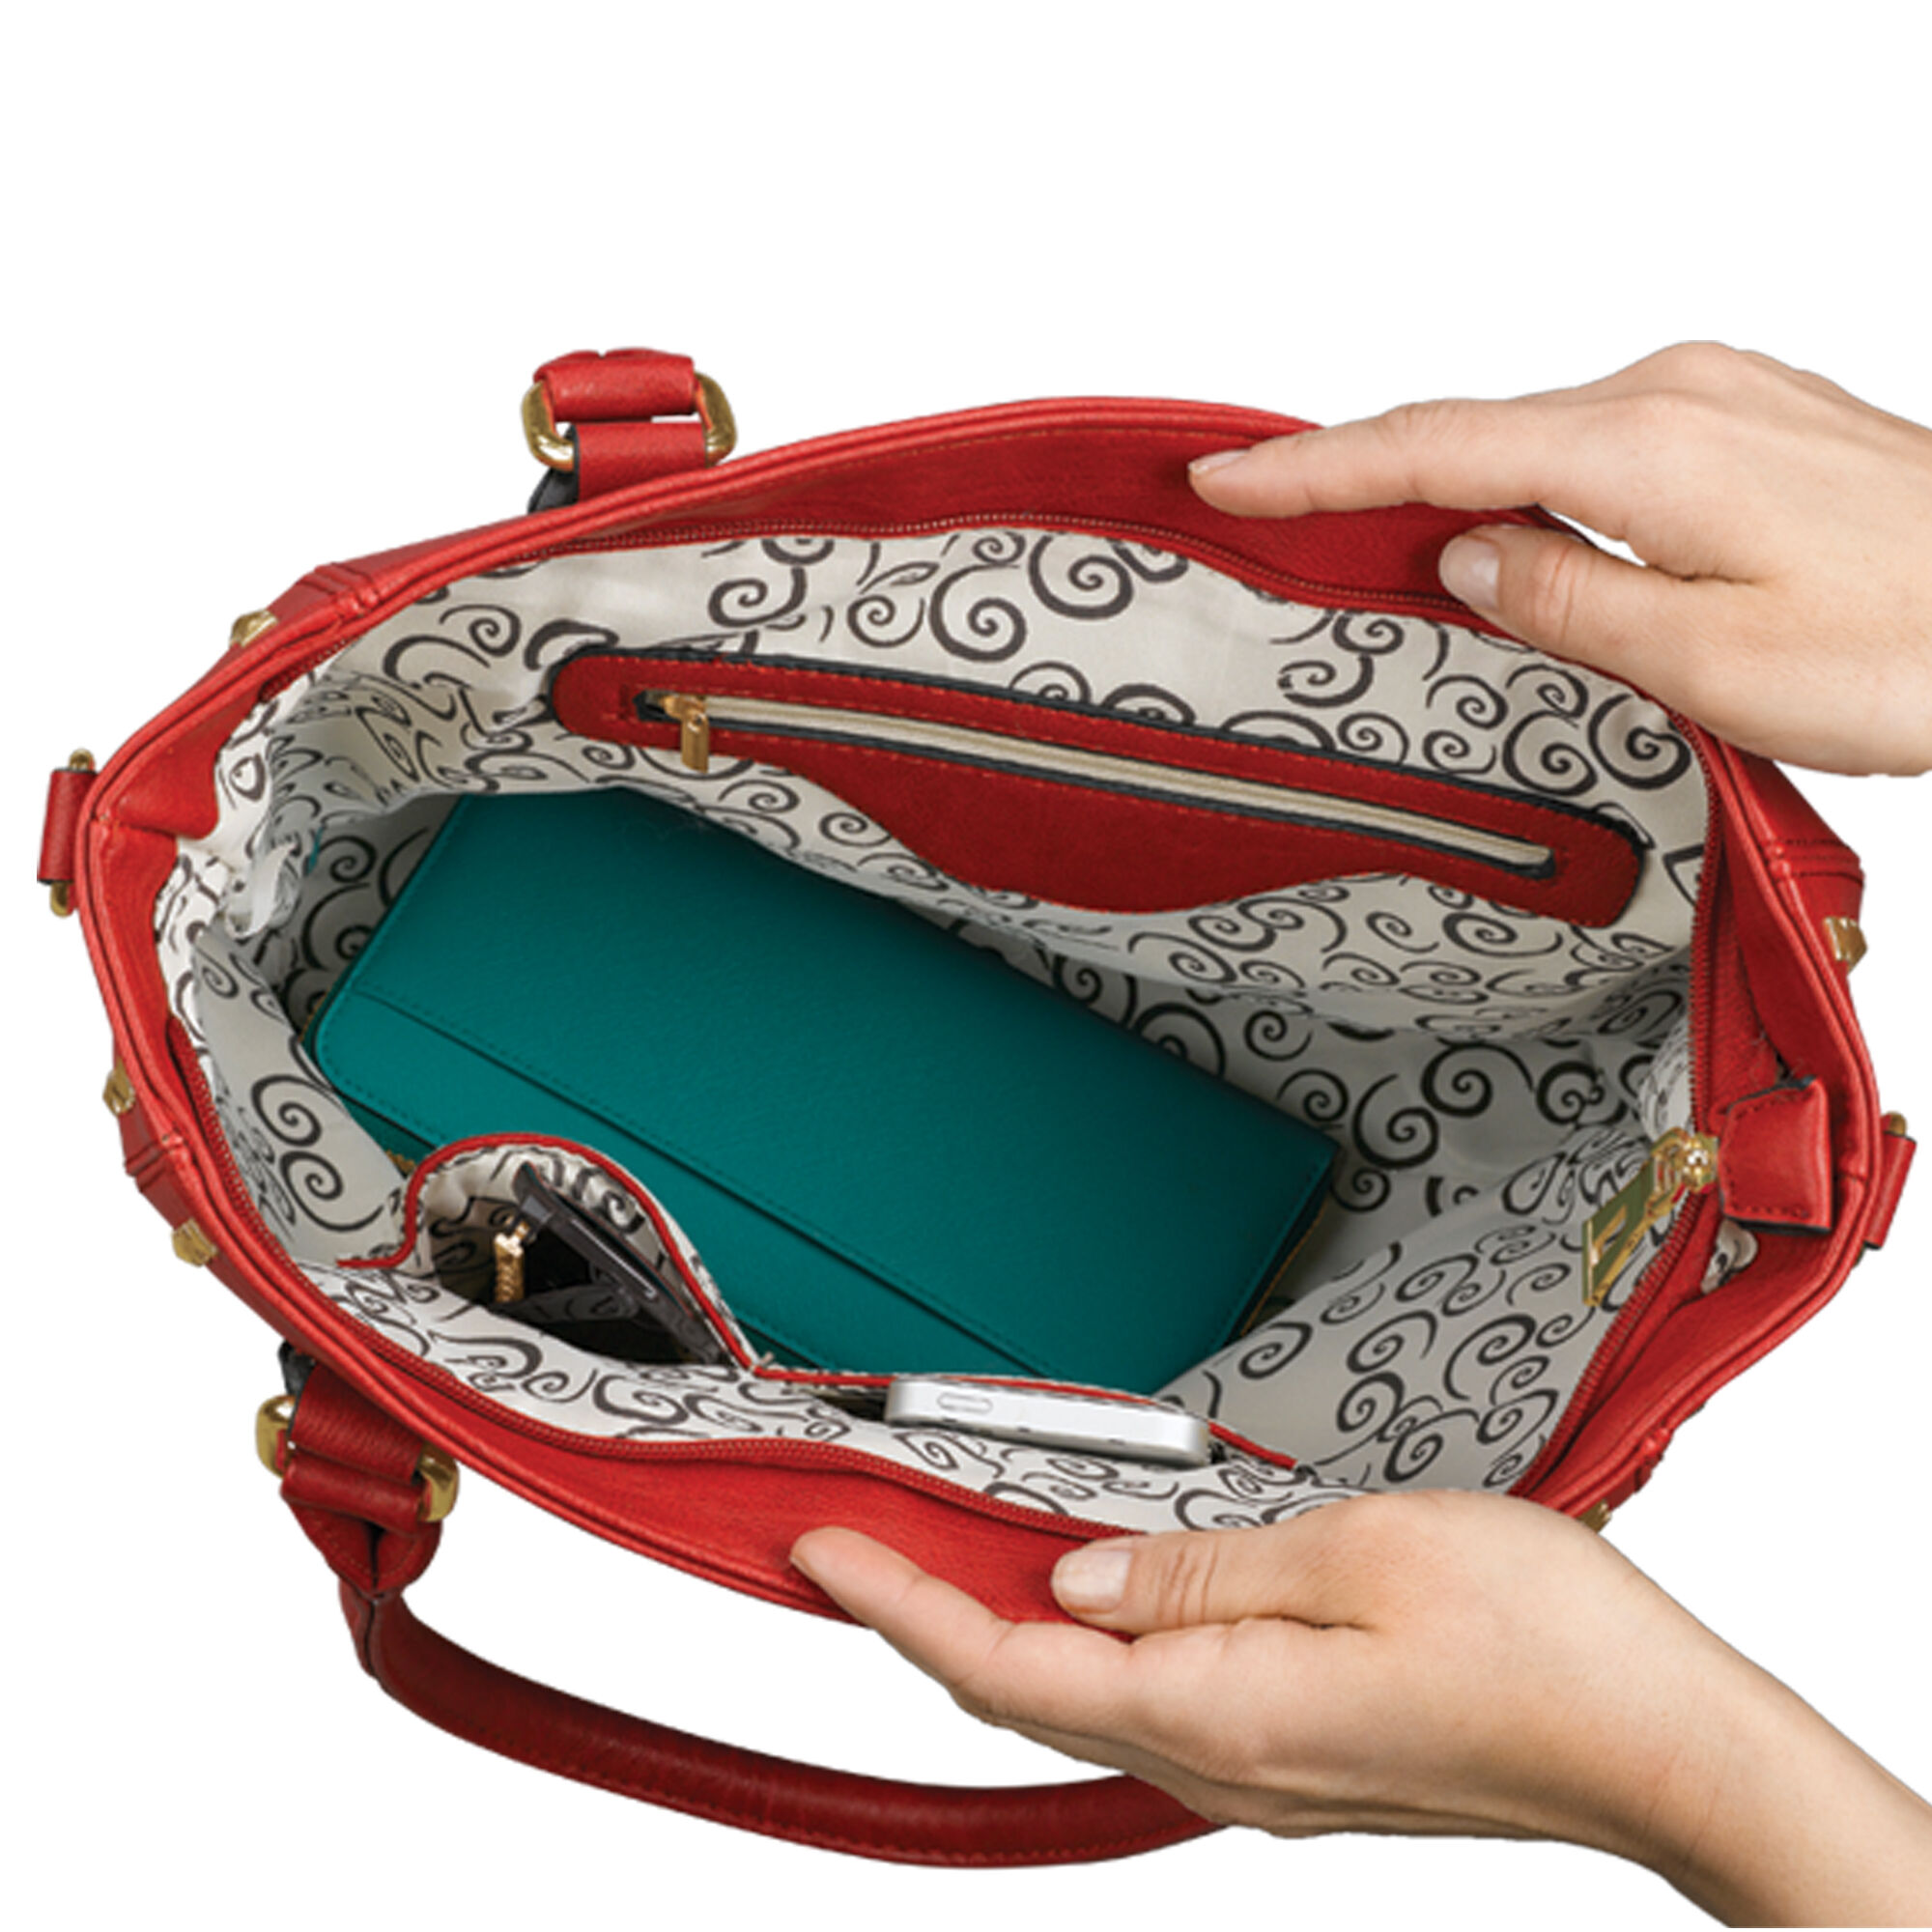 The Ruby Royale Handbag 0068 0041 c inside